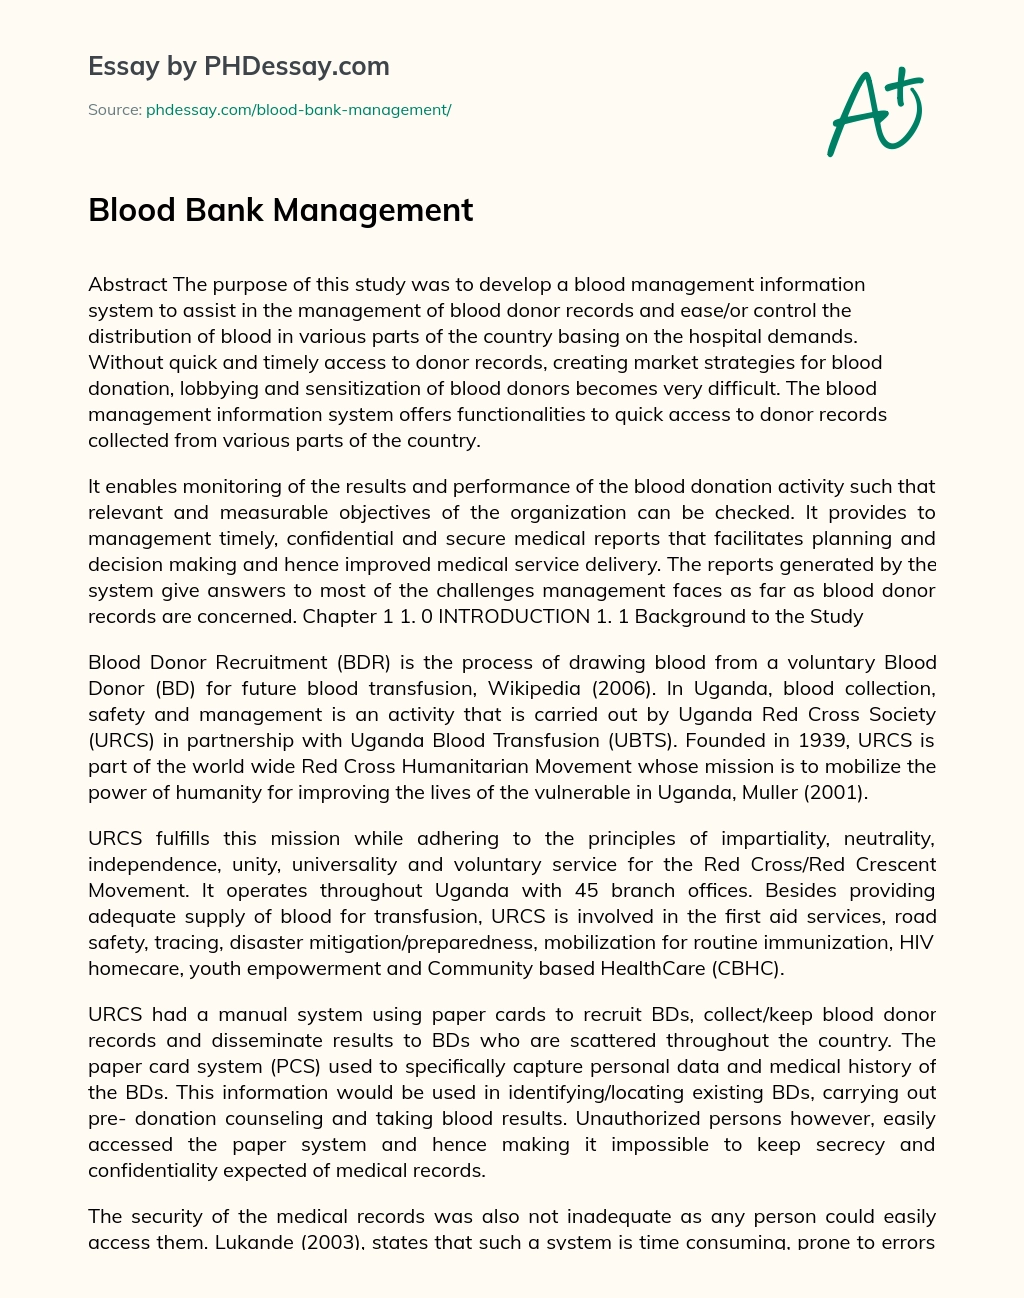 Blood Bank Management essay